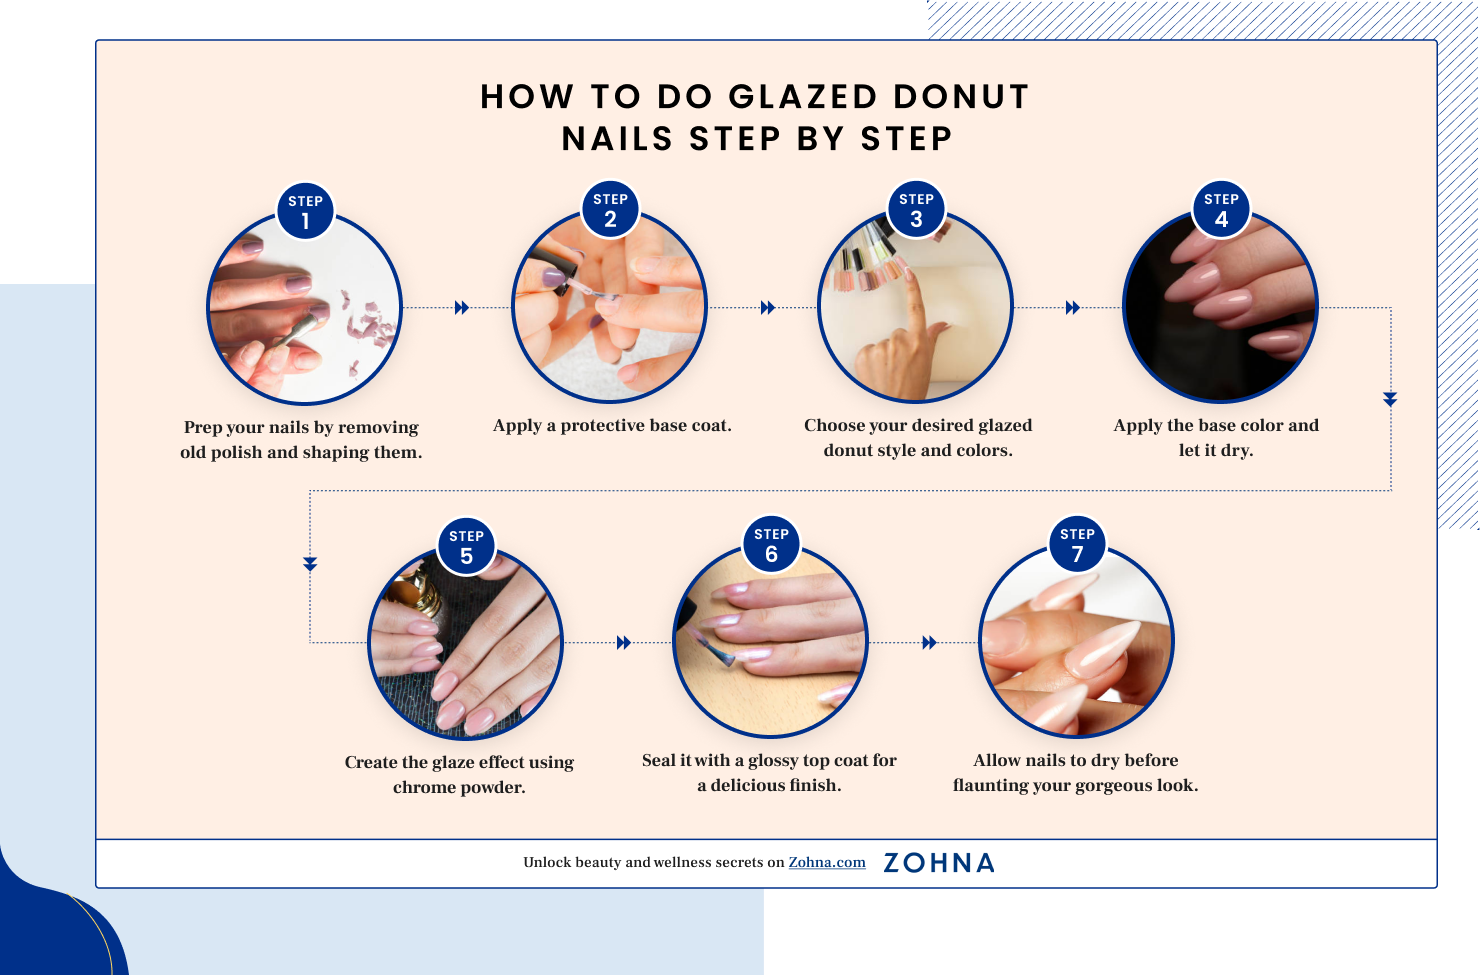 How to Do Glazed Donut Nails Step by Step